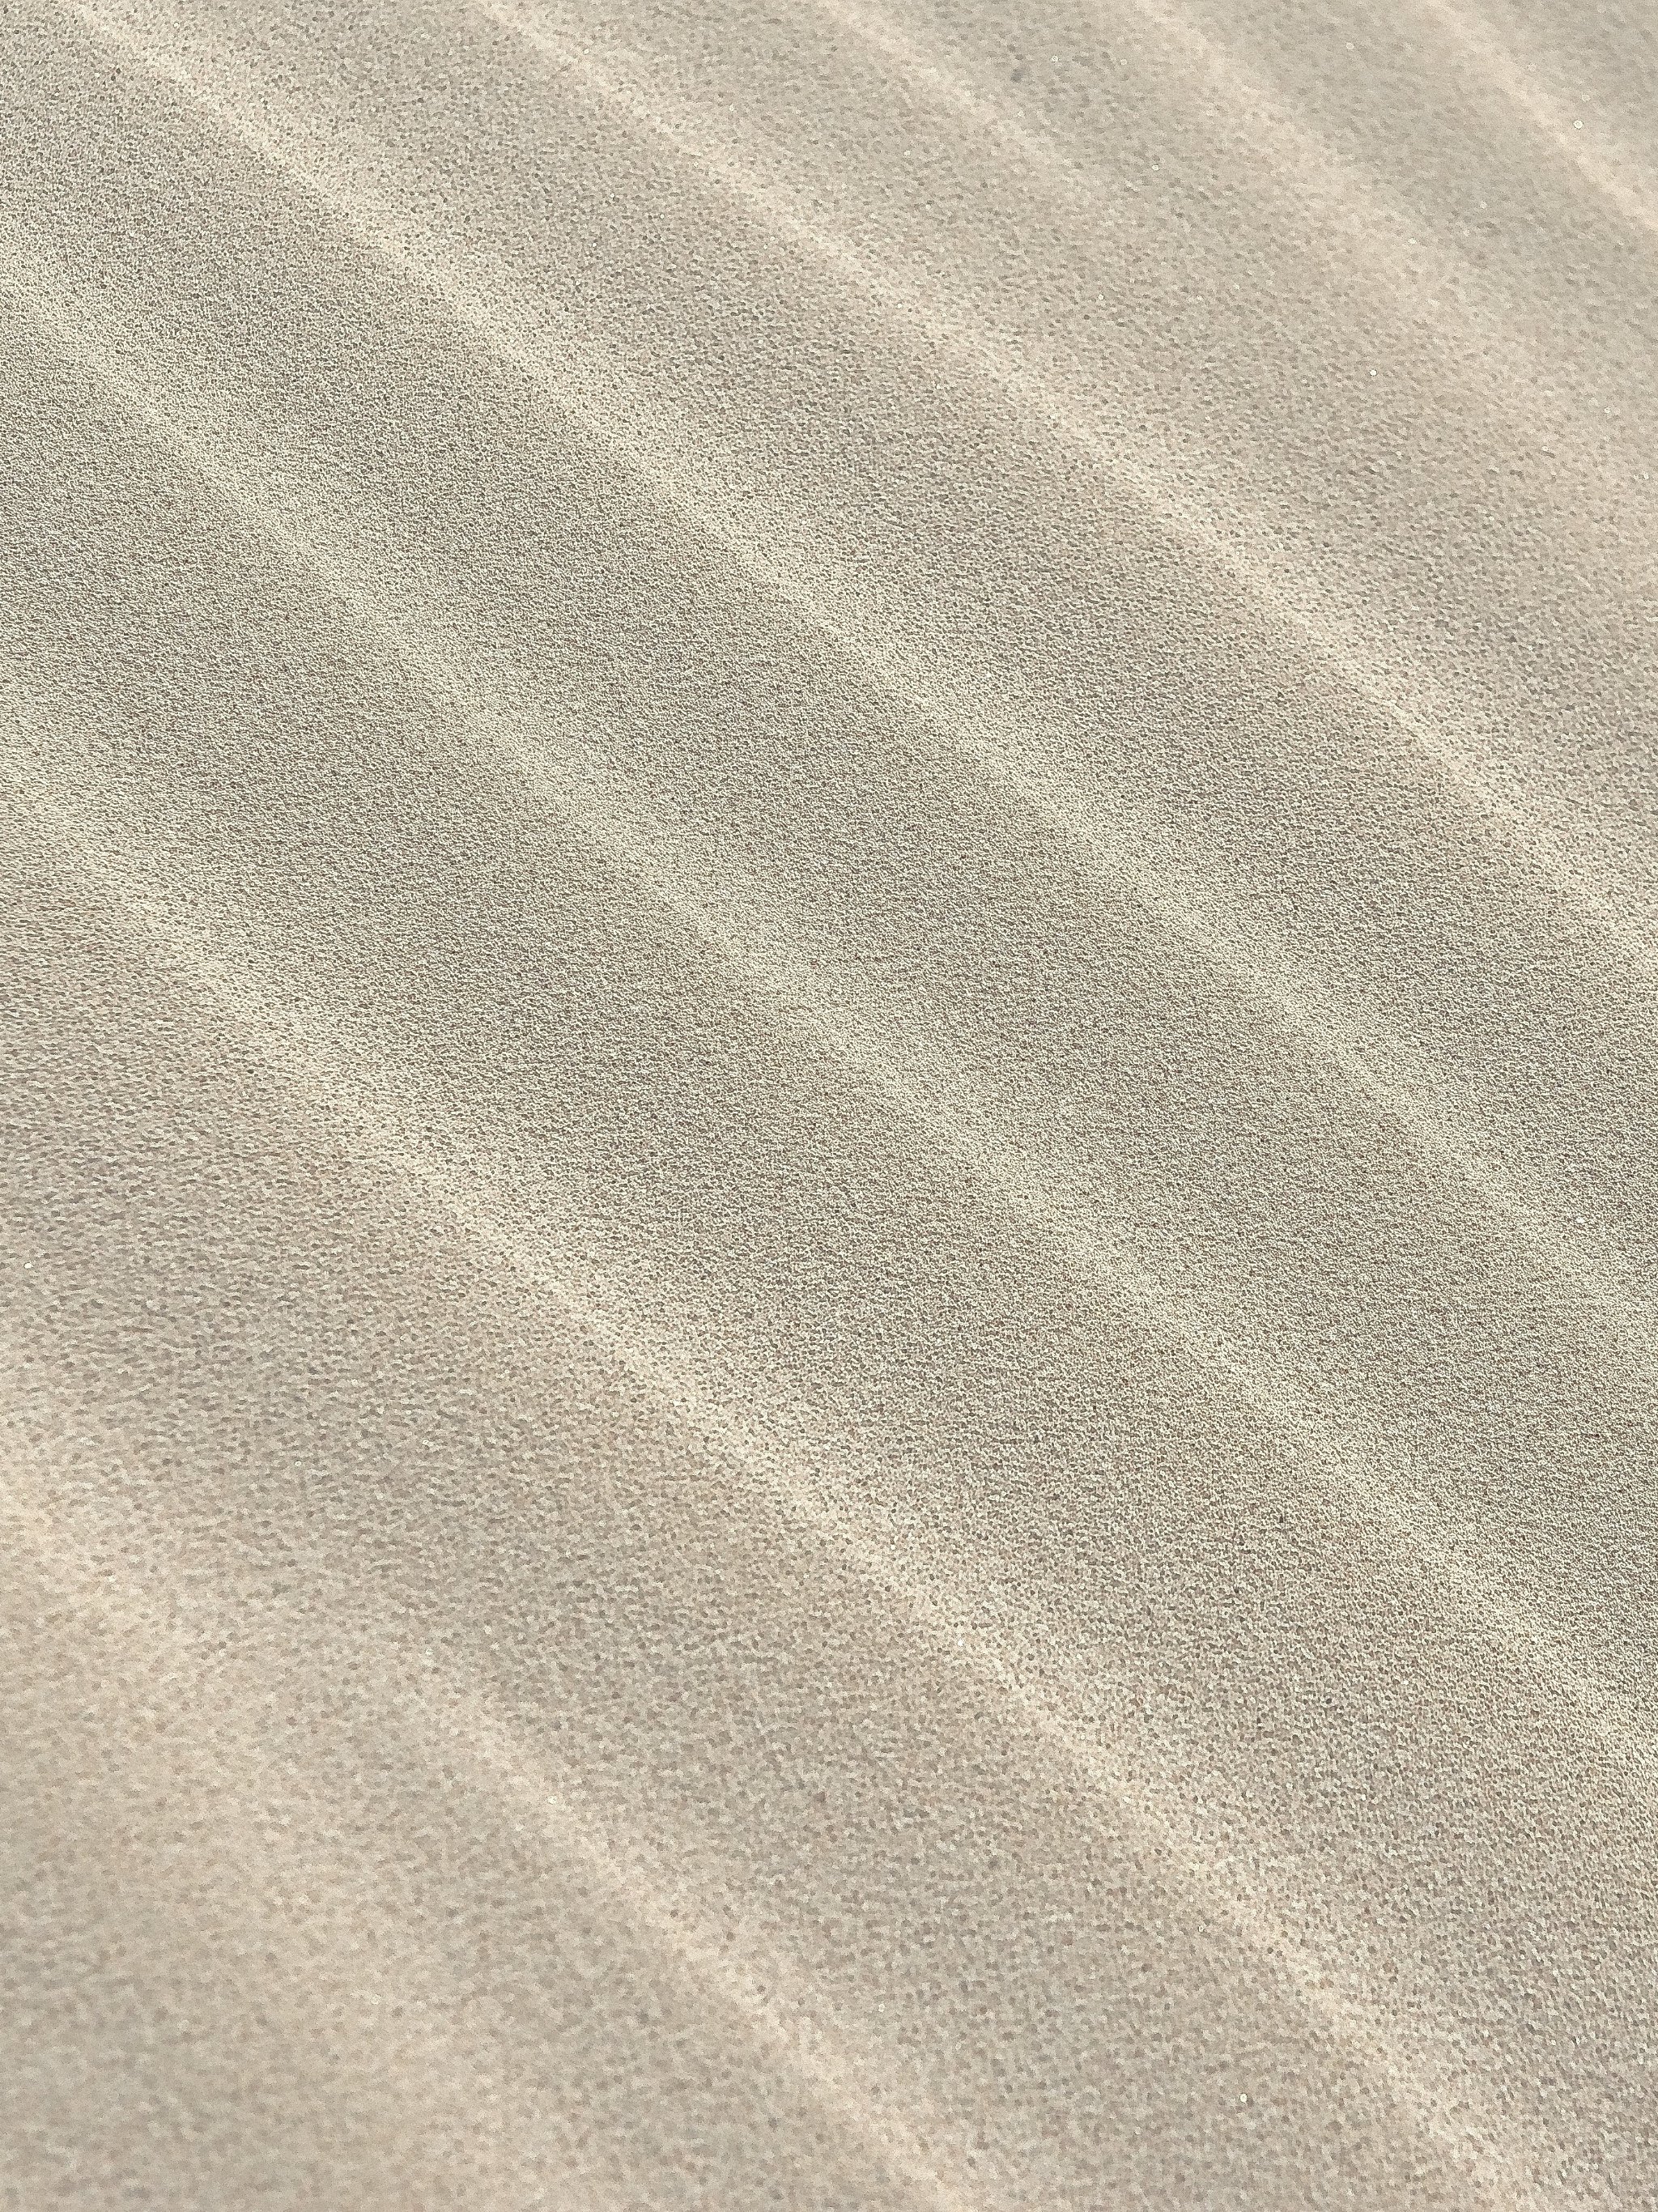 Sand Texture - Sand , HD Wallpaper & Backgrounds